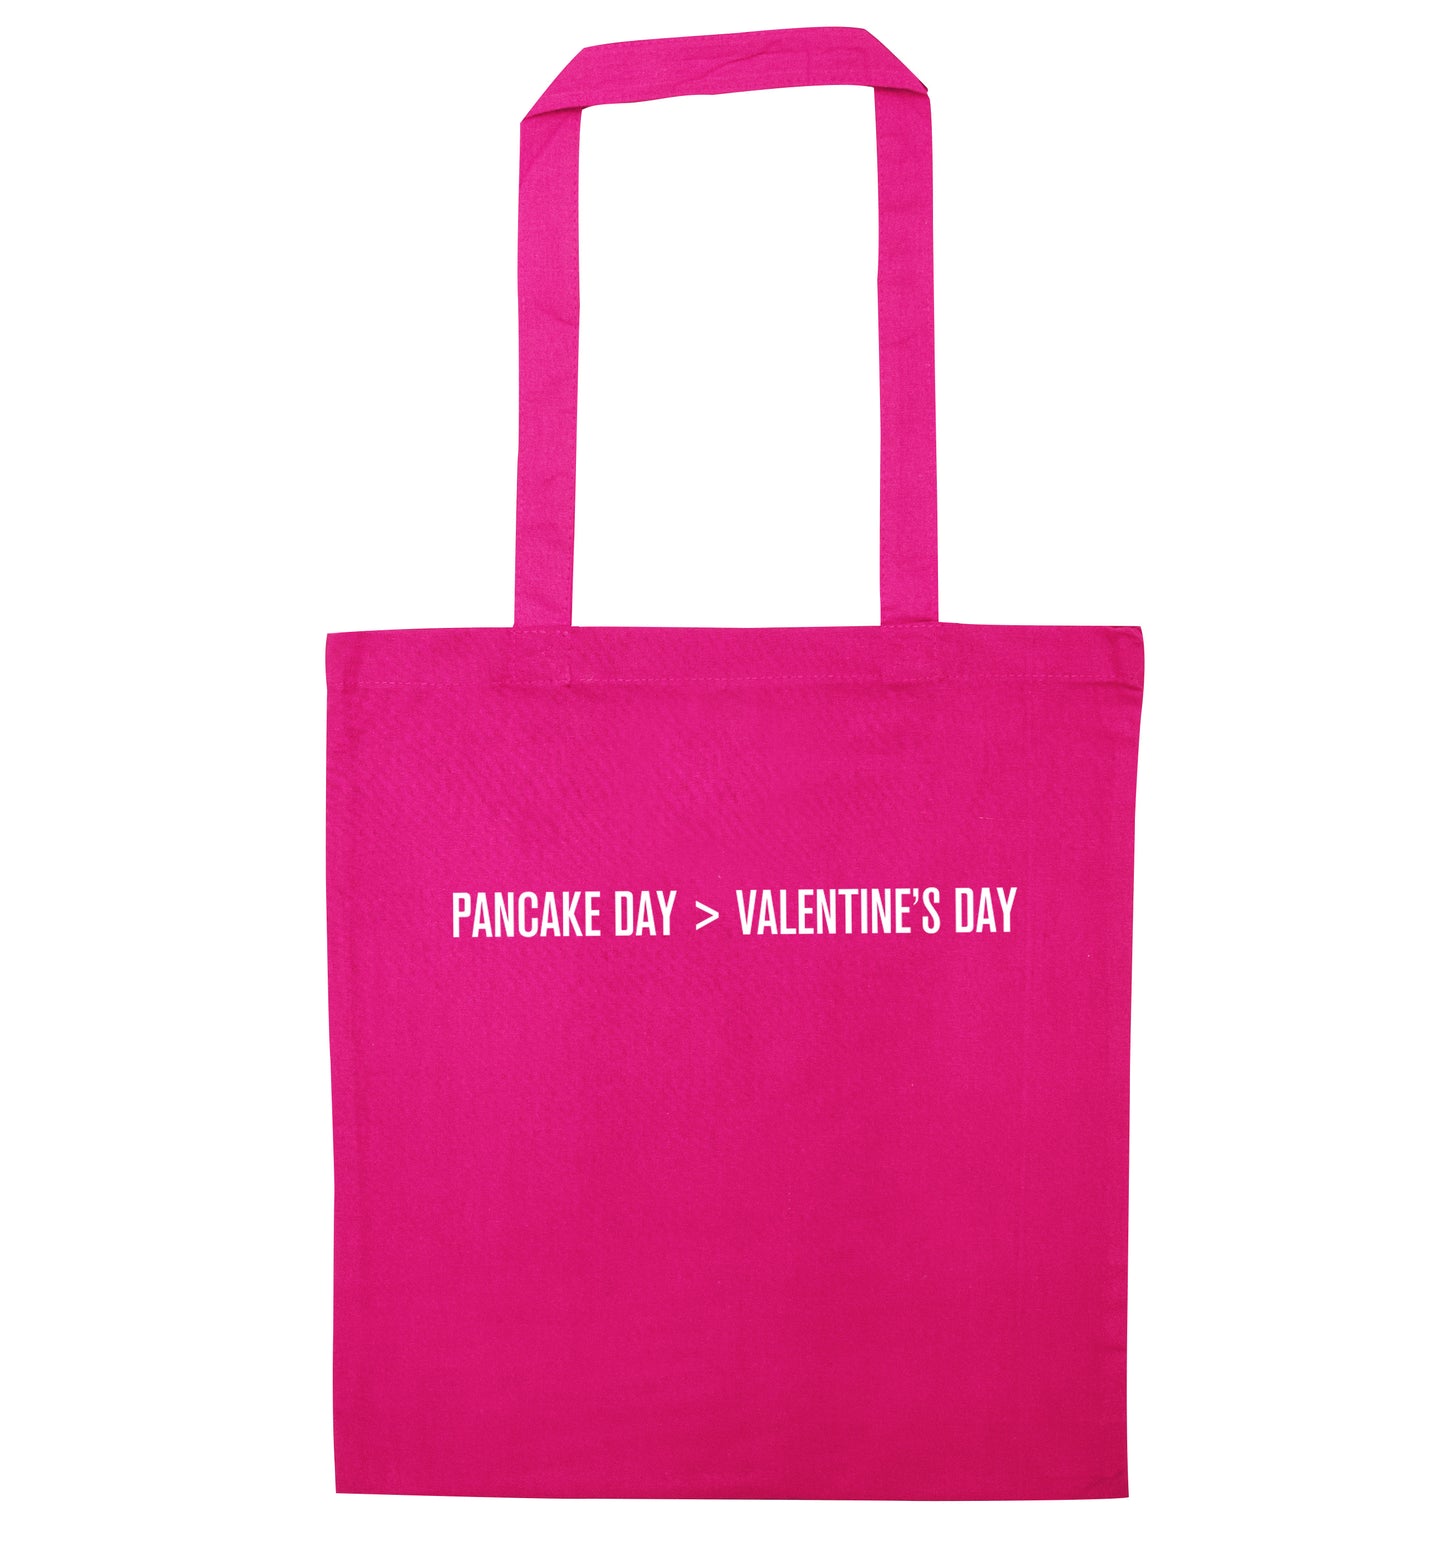 Valentine's day > pancake day pink tote bag